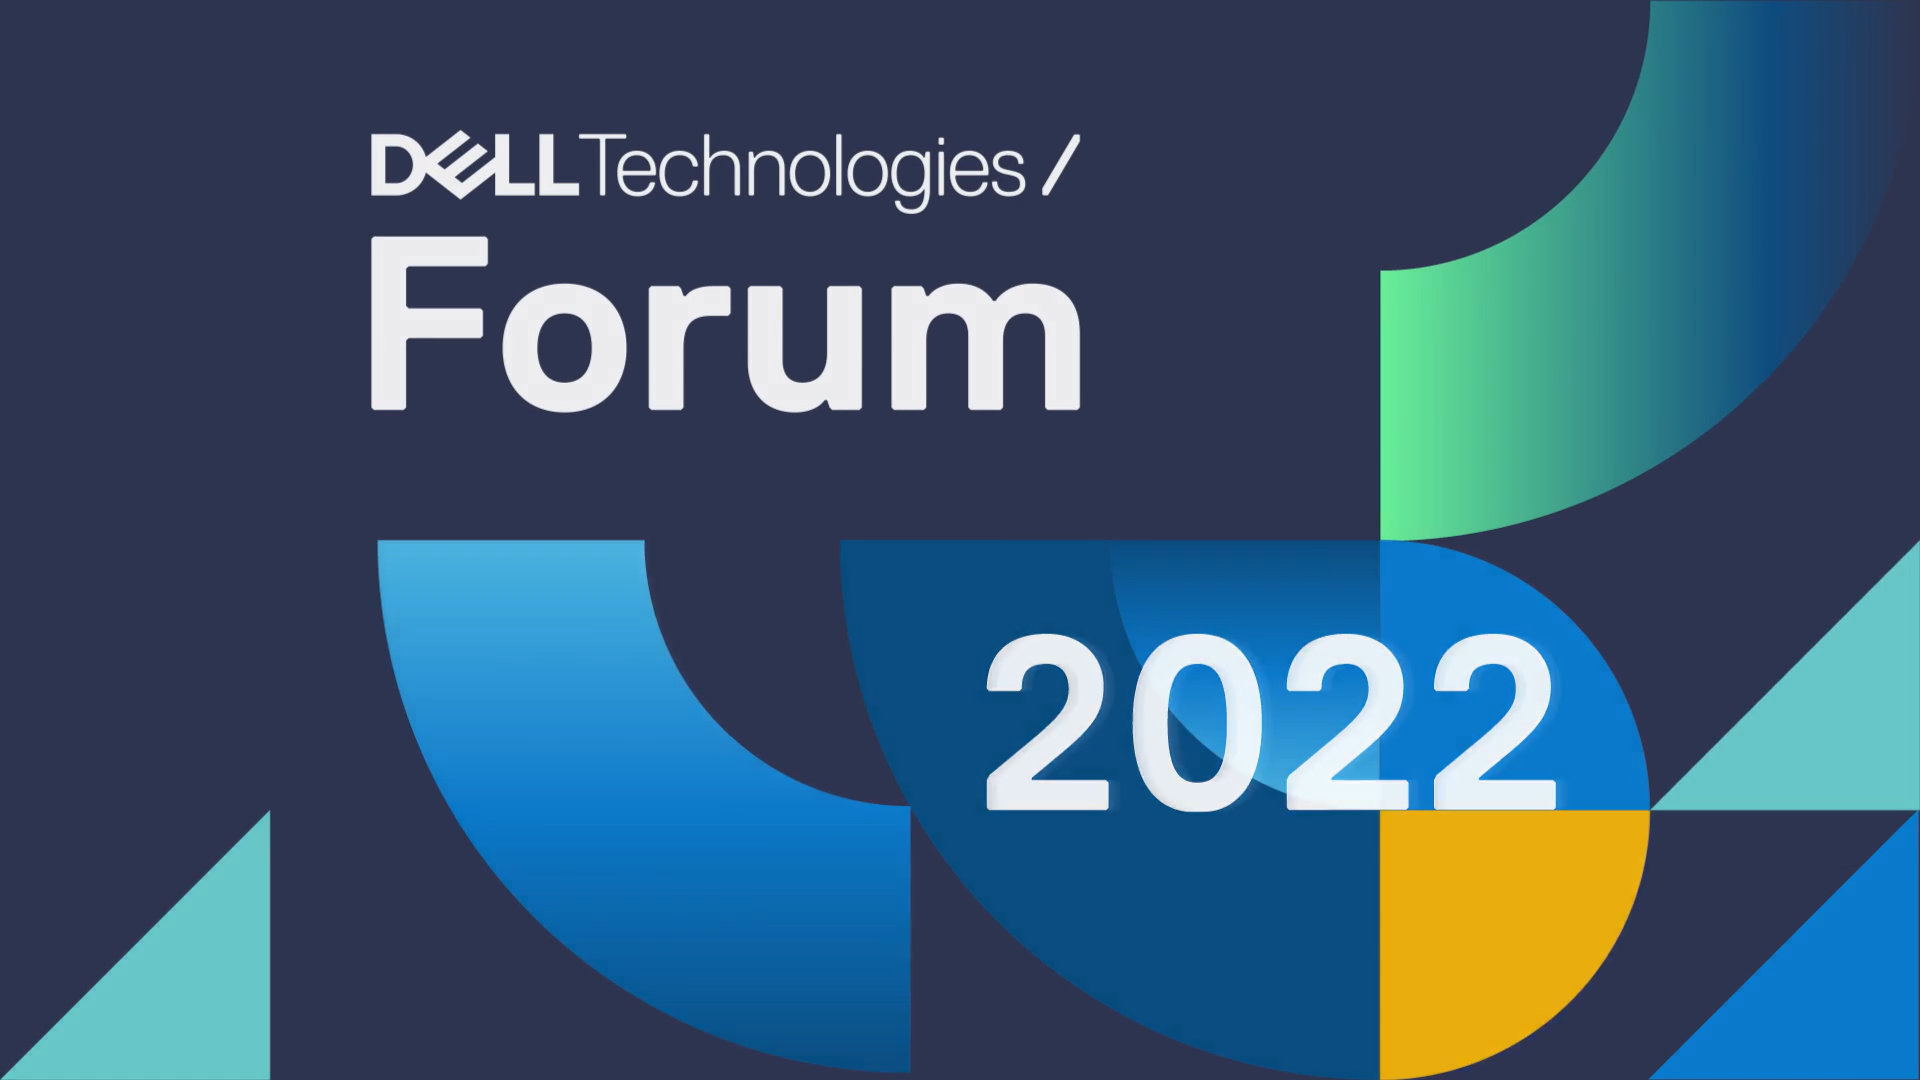 Dell-Technologies-Forum-2022-Budapest